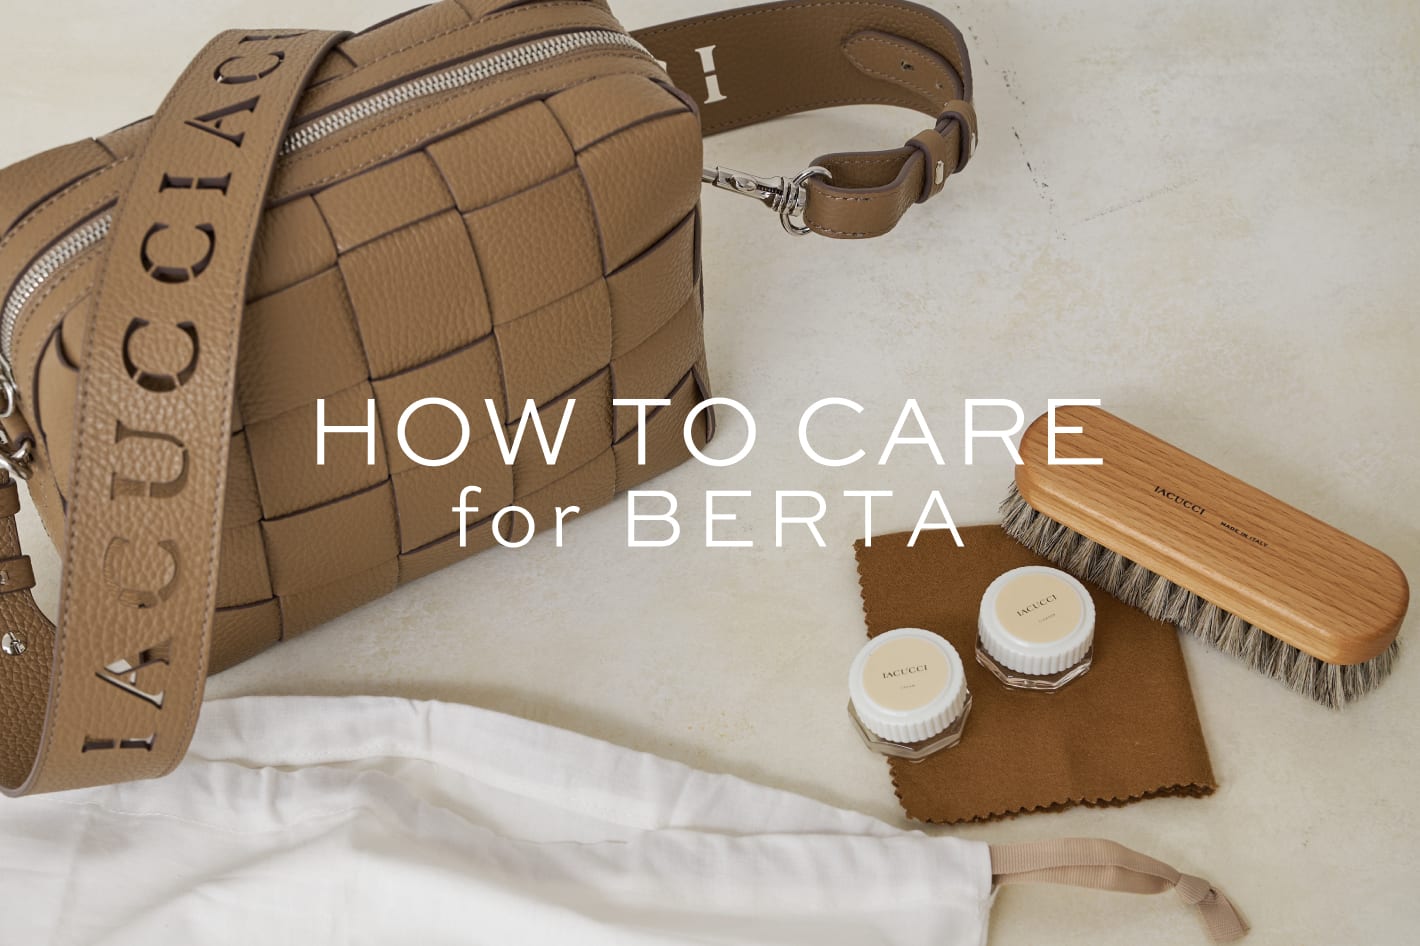 IACUCCI HOW TO CARE for BERTA -人気のバッグをお手入れ方法をともにご紹介-